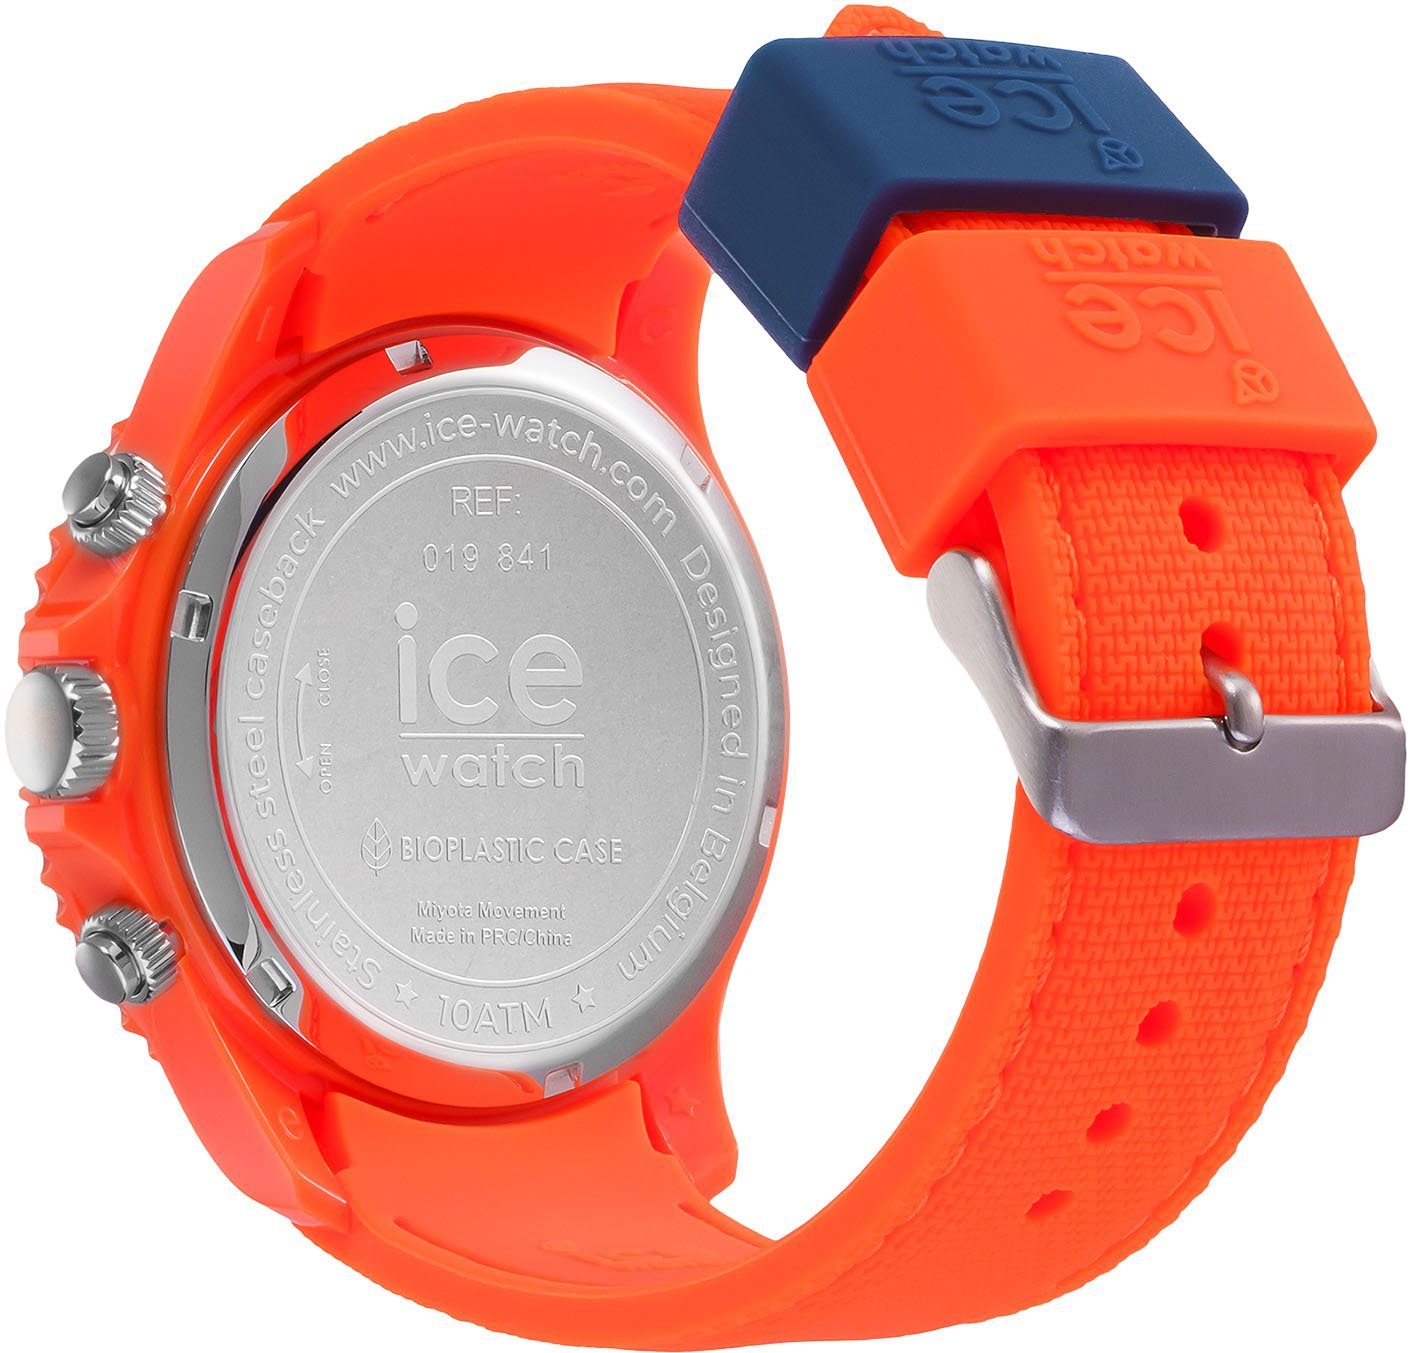 ice-watch Chronograph ICE - Large - CH, 019841 - chrono Orange blue